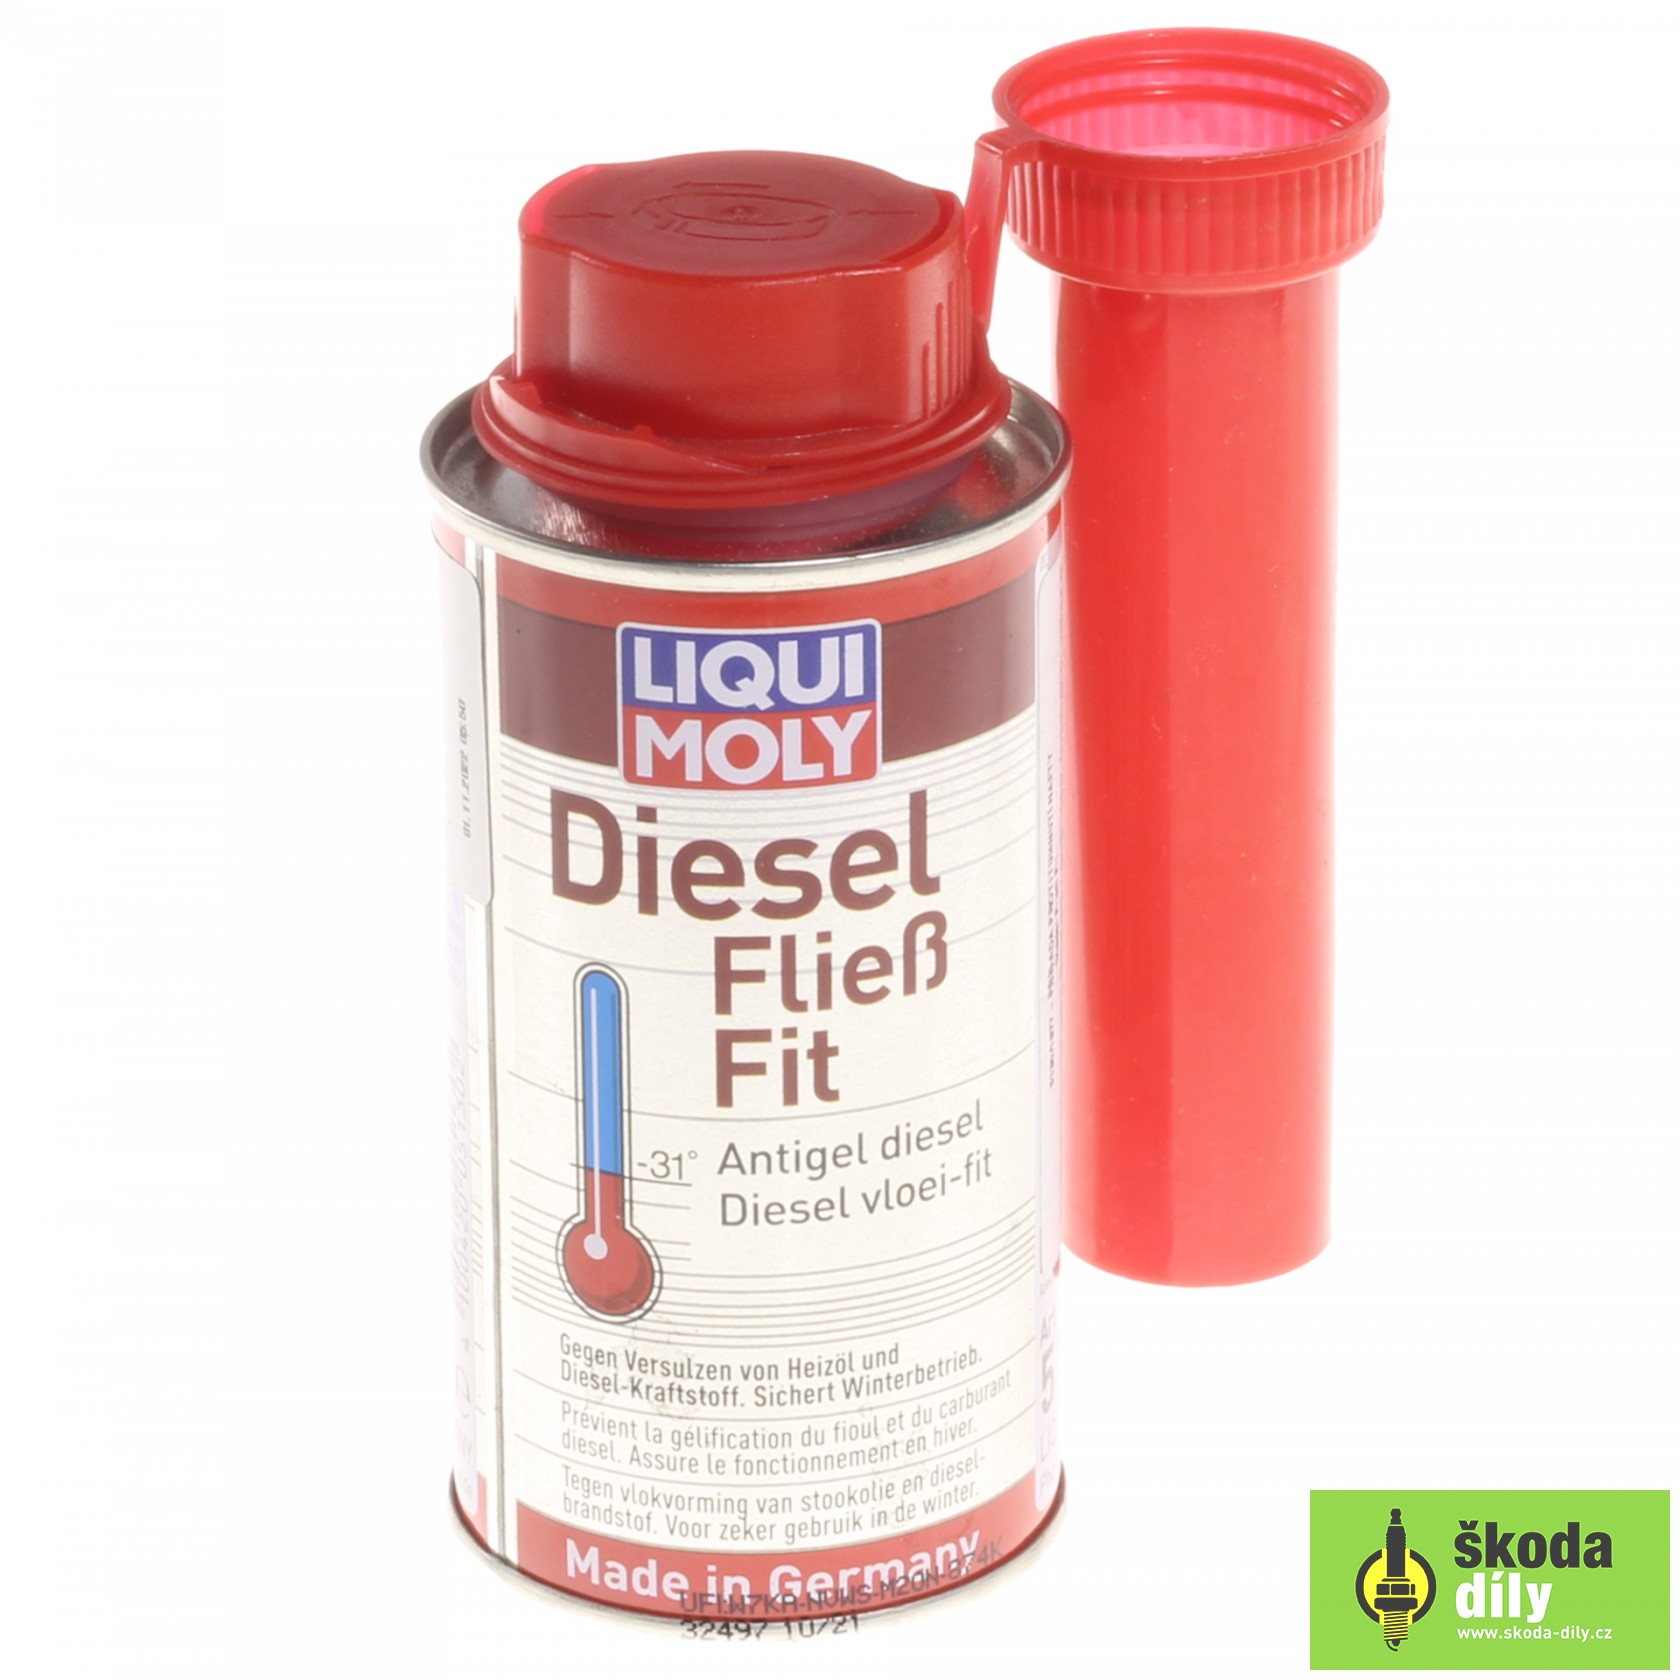 Winter Pflegeset LIQUI MOLY 3-teilig für Motor(Diesel) + Gummi